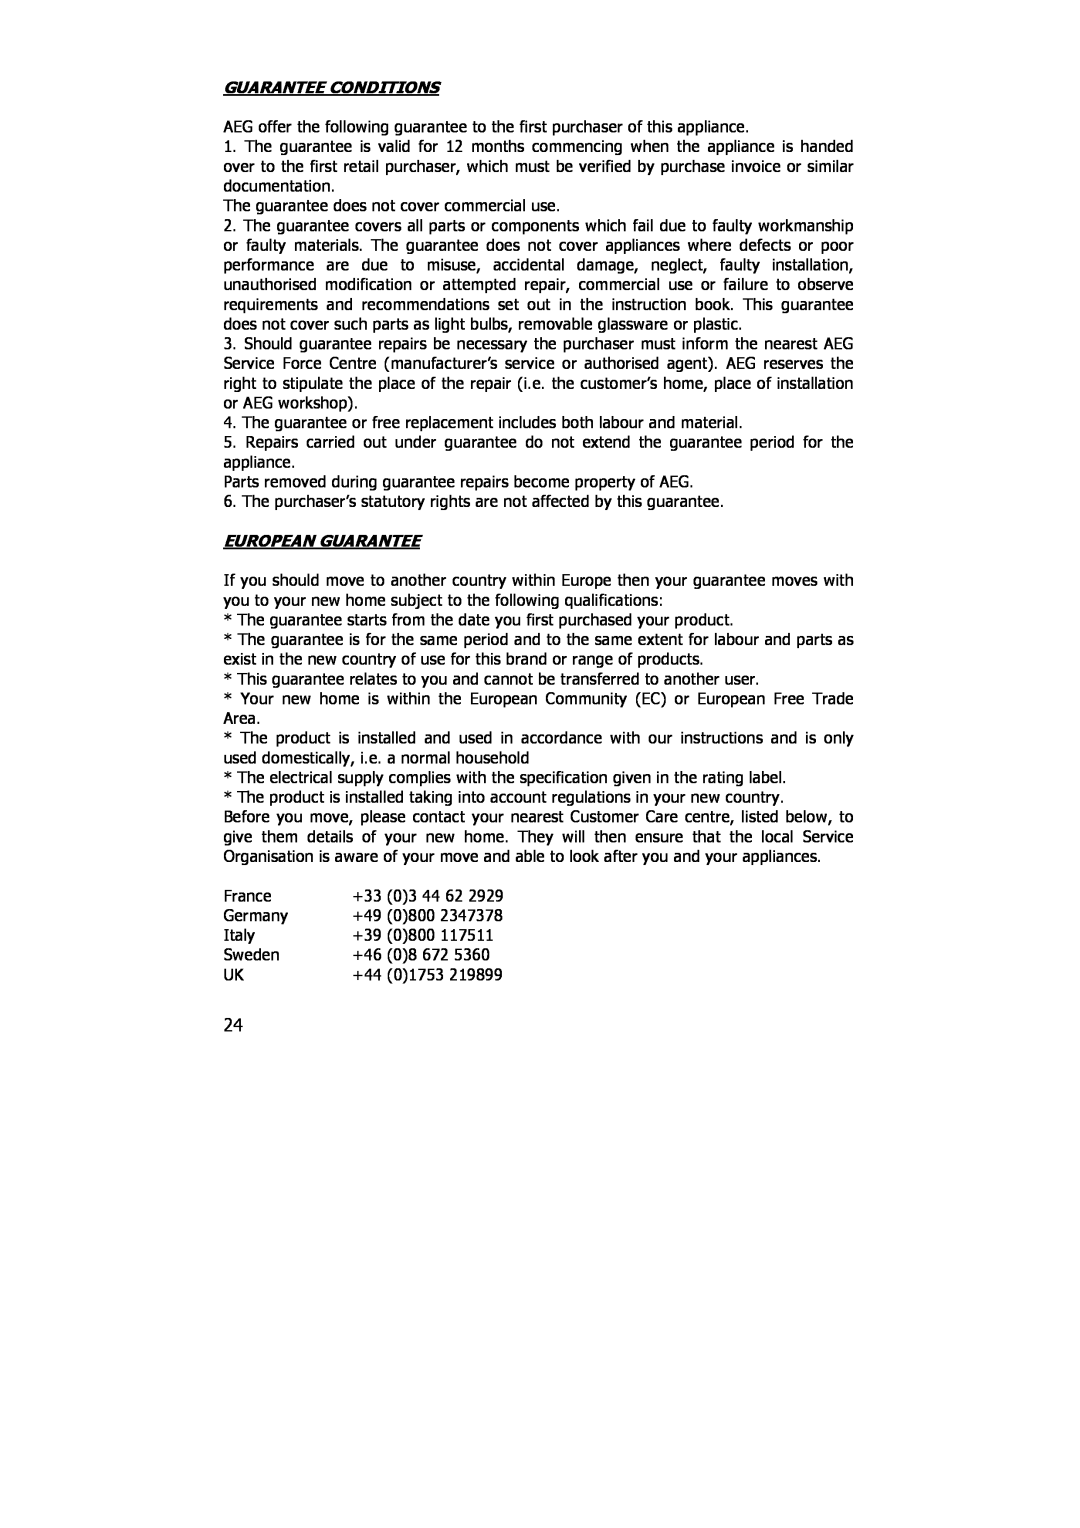 Electrolux PE 8036-M installation instructions Guarantee Conditions, European Guarantee 